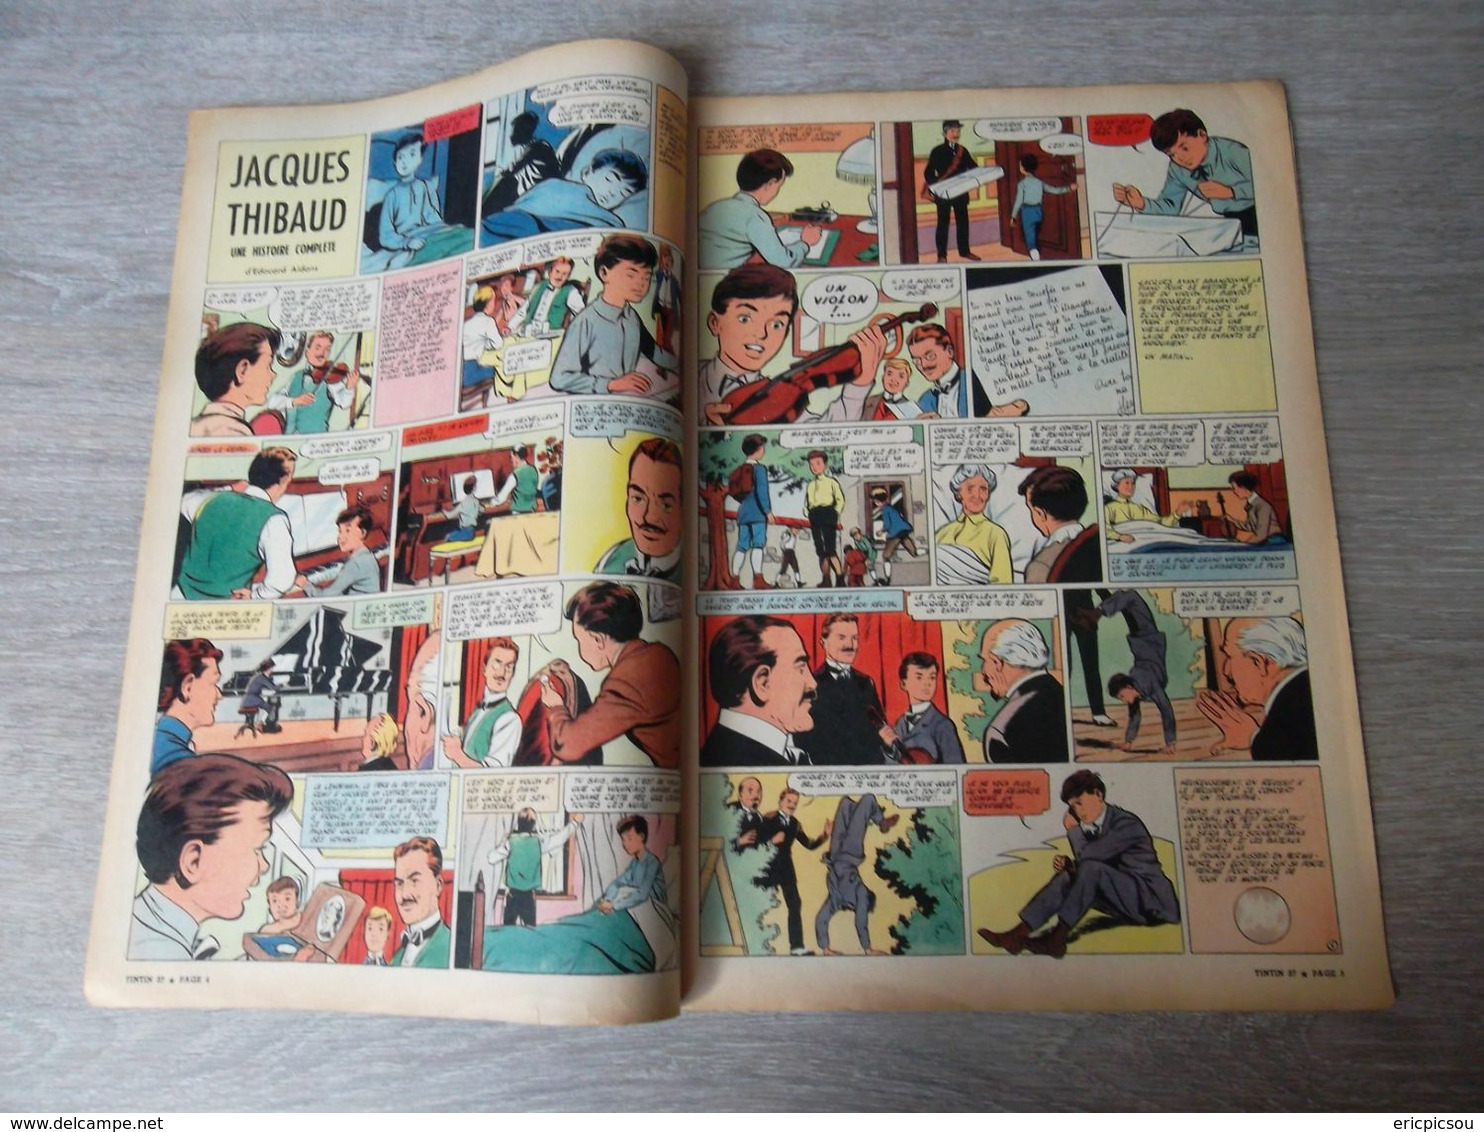 Tintin ( Magazine L'hebdomadaire ) 1958 N°37 - Tintin